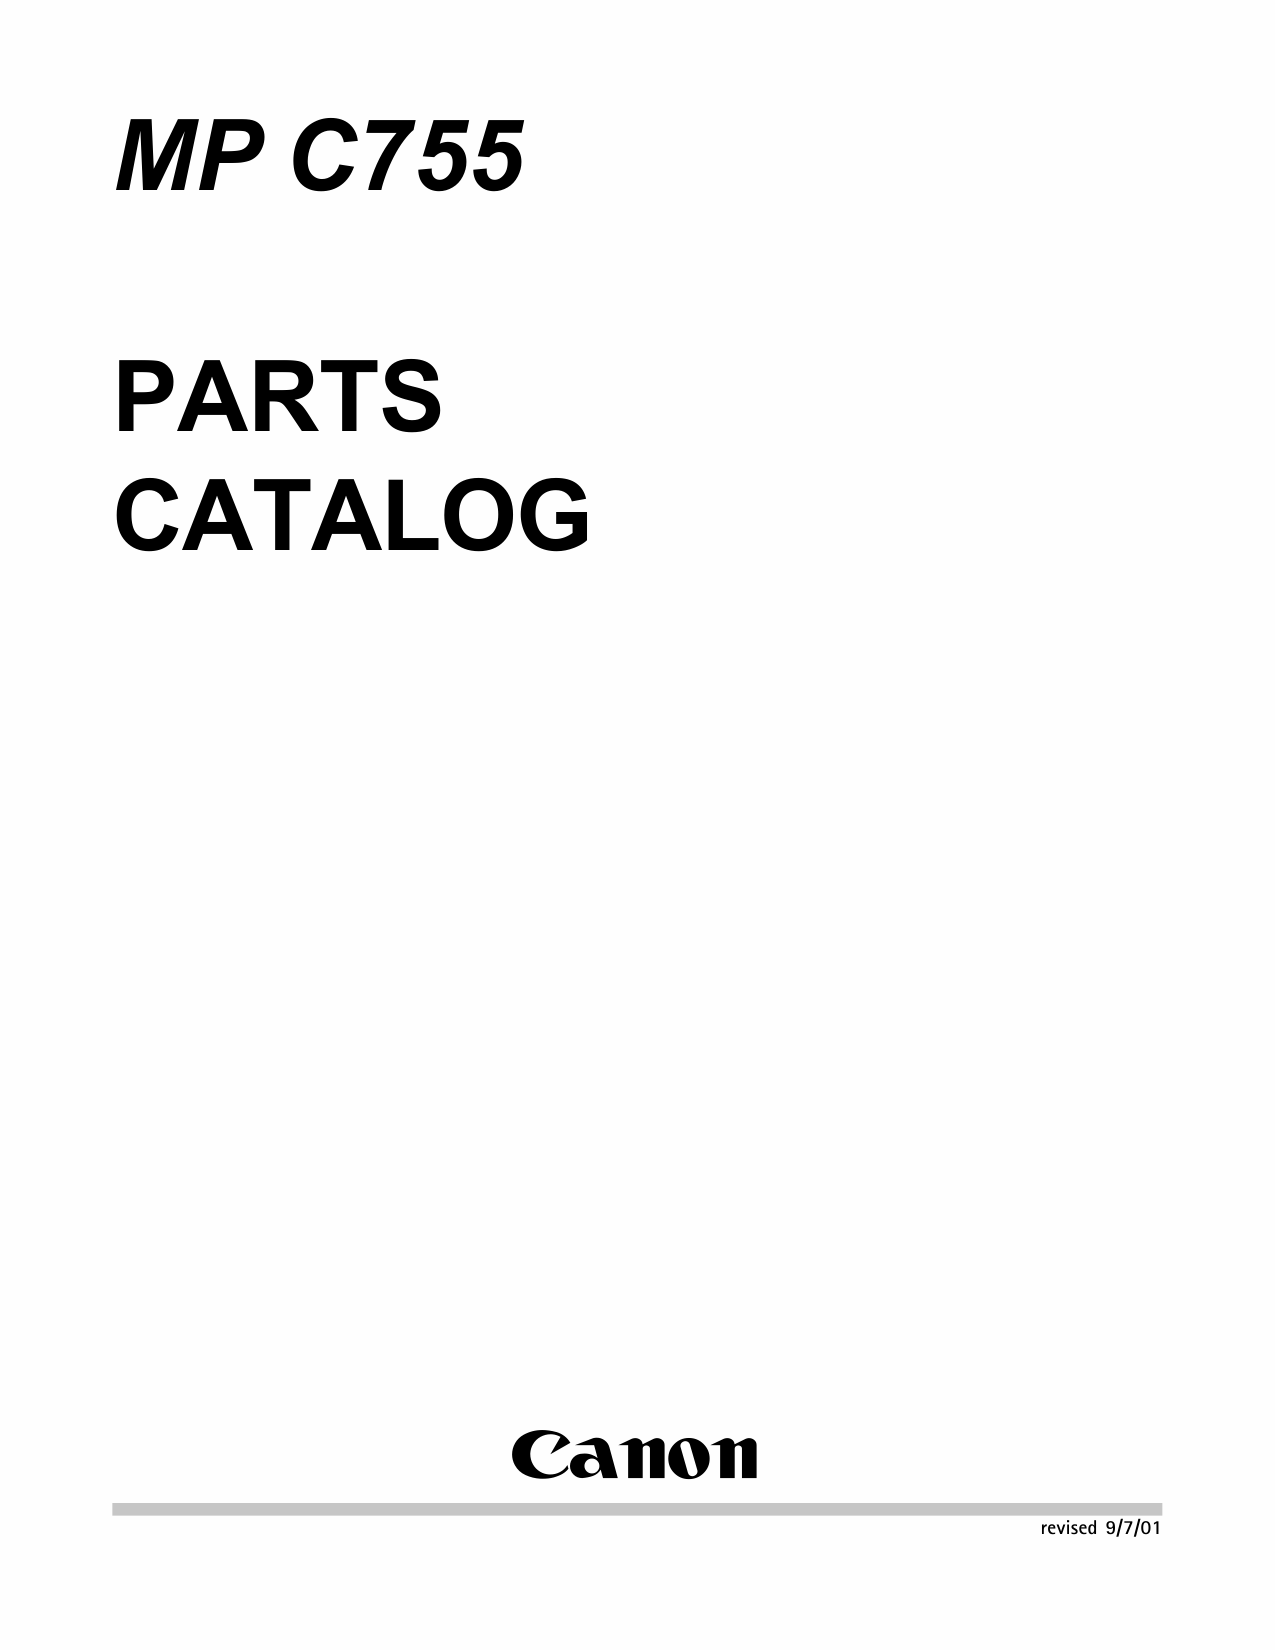 Canon MultiPASS MP-C755 Parts Catalog Manual-1